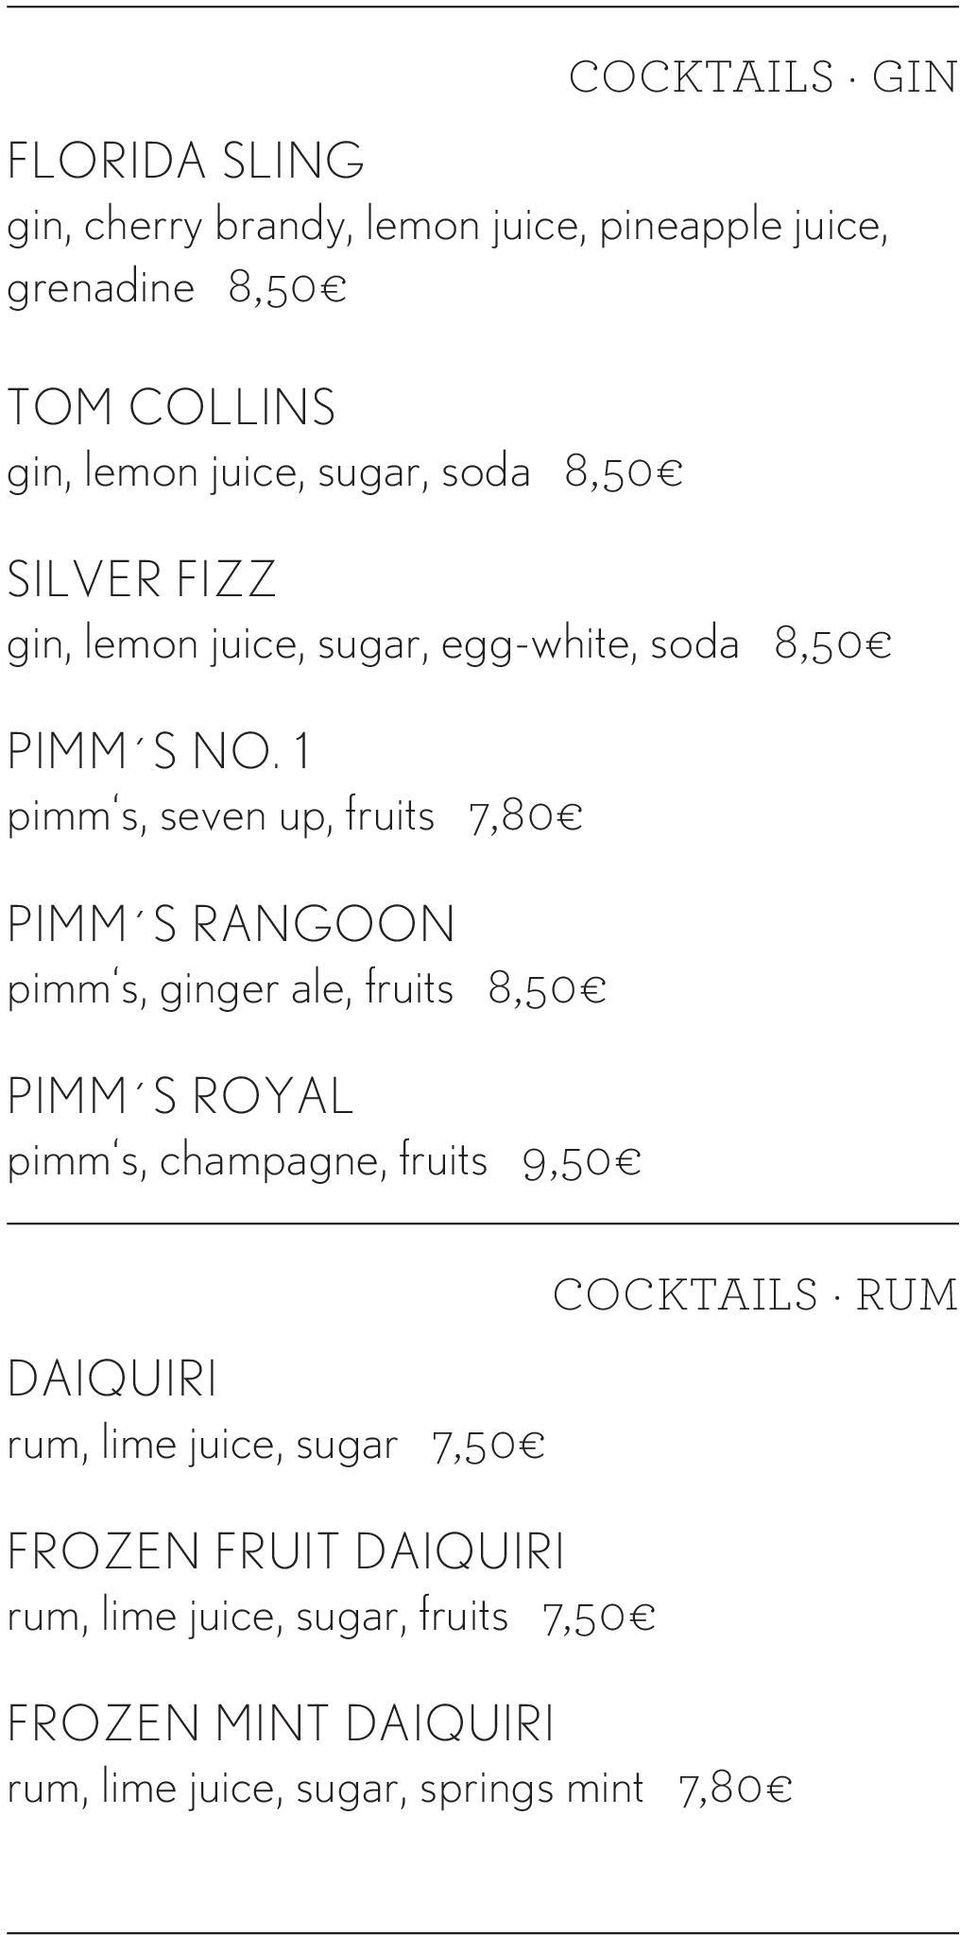 1 pimm s, seven up, fruits 7,80 Pimm s RangooN pimm s, ginger ale, fruits 8,50 Pimm s Royal pimm s, champagne, fruits 9,50